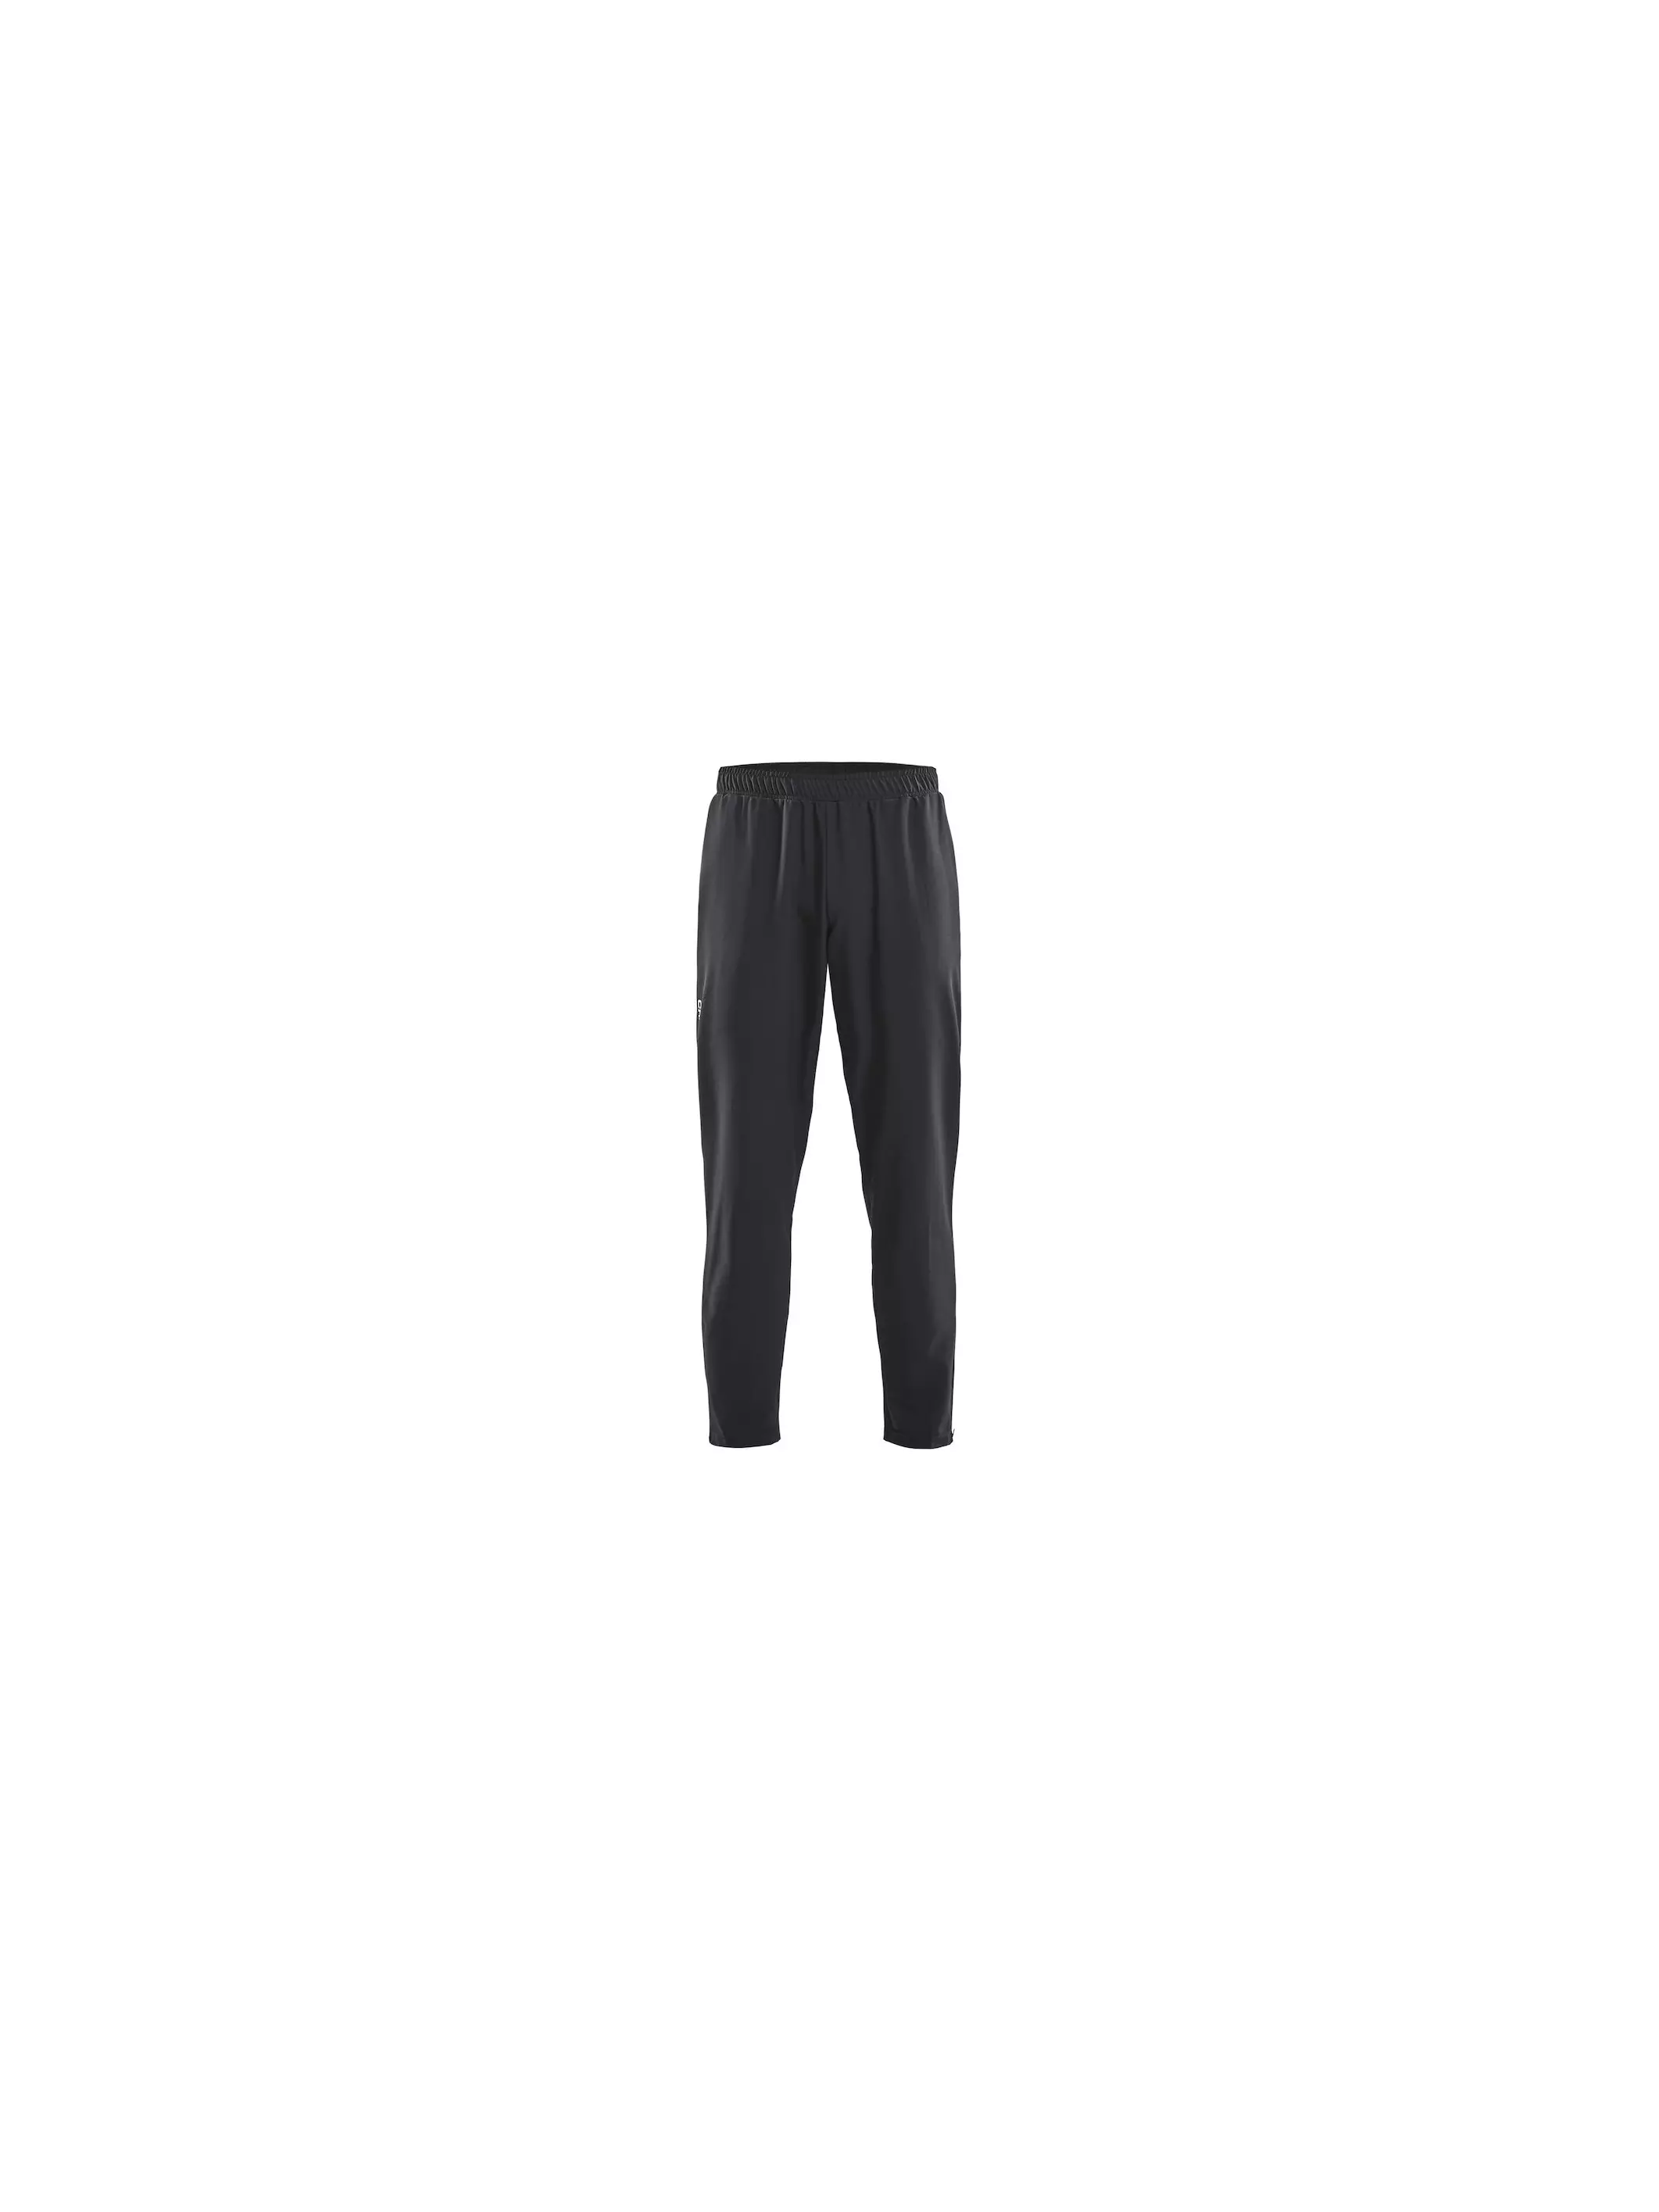 Pantalons & Collants Craft RUSH WIND PANTS M - 1907382